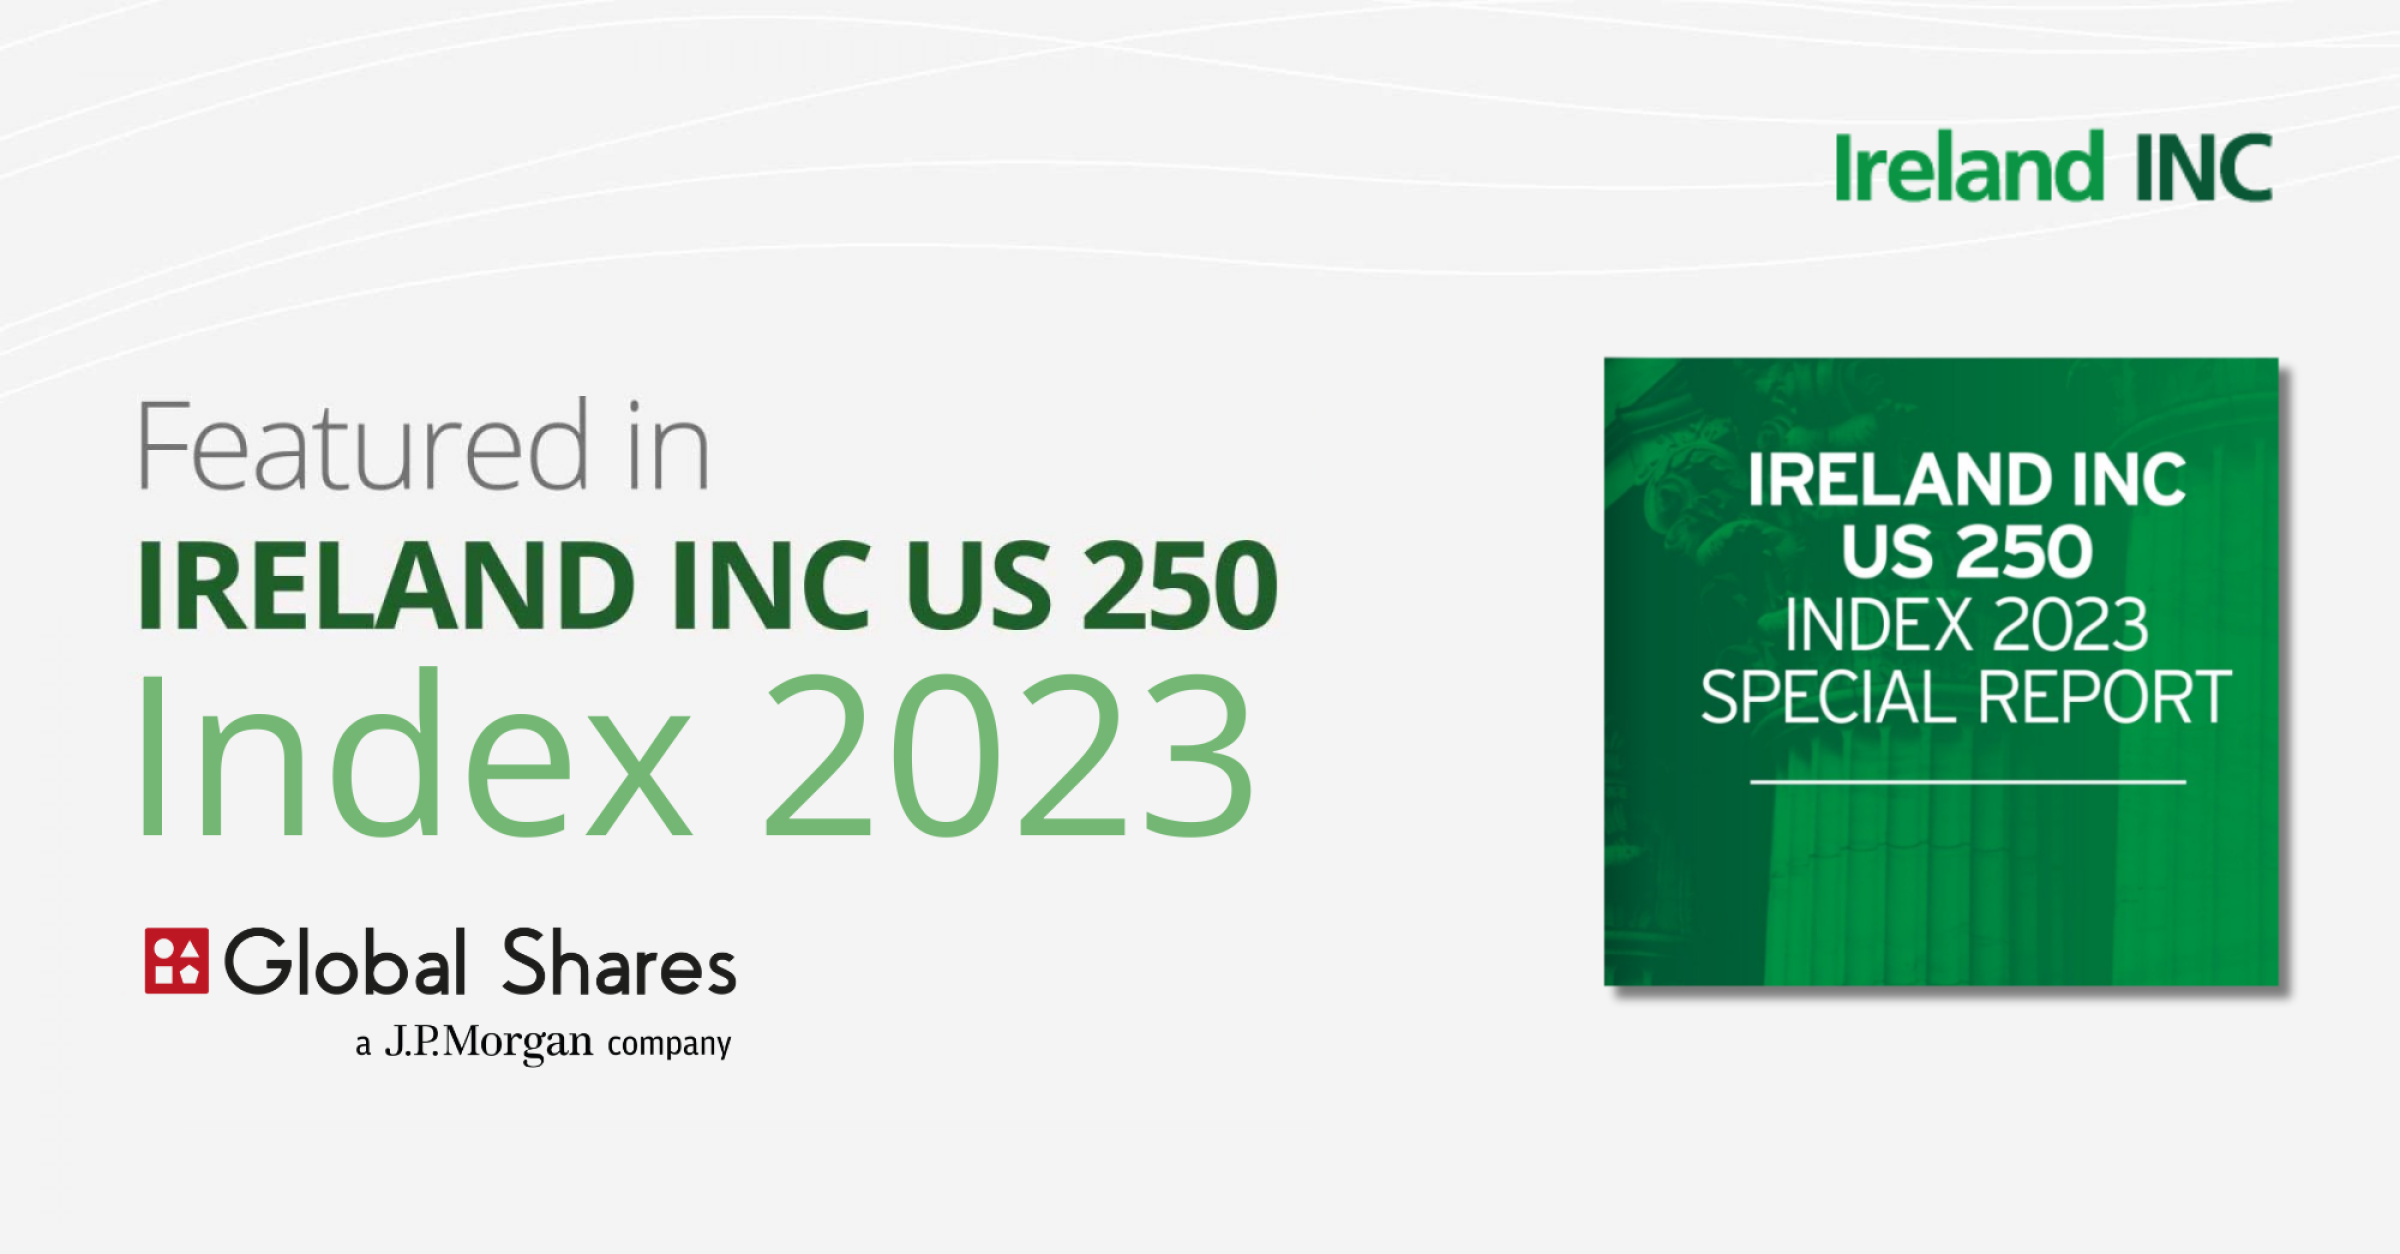 We’re on the Ireland INC US 250 Index 2023